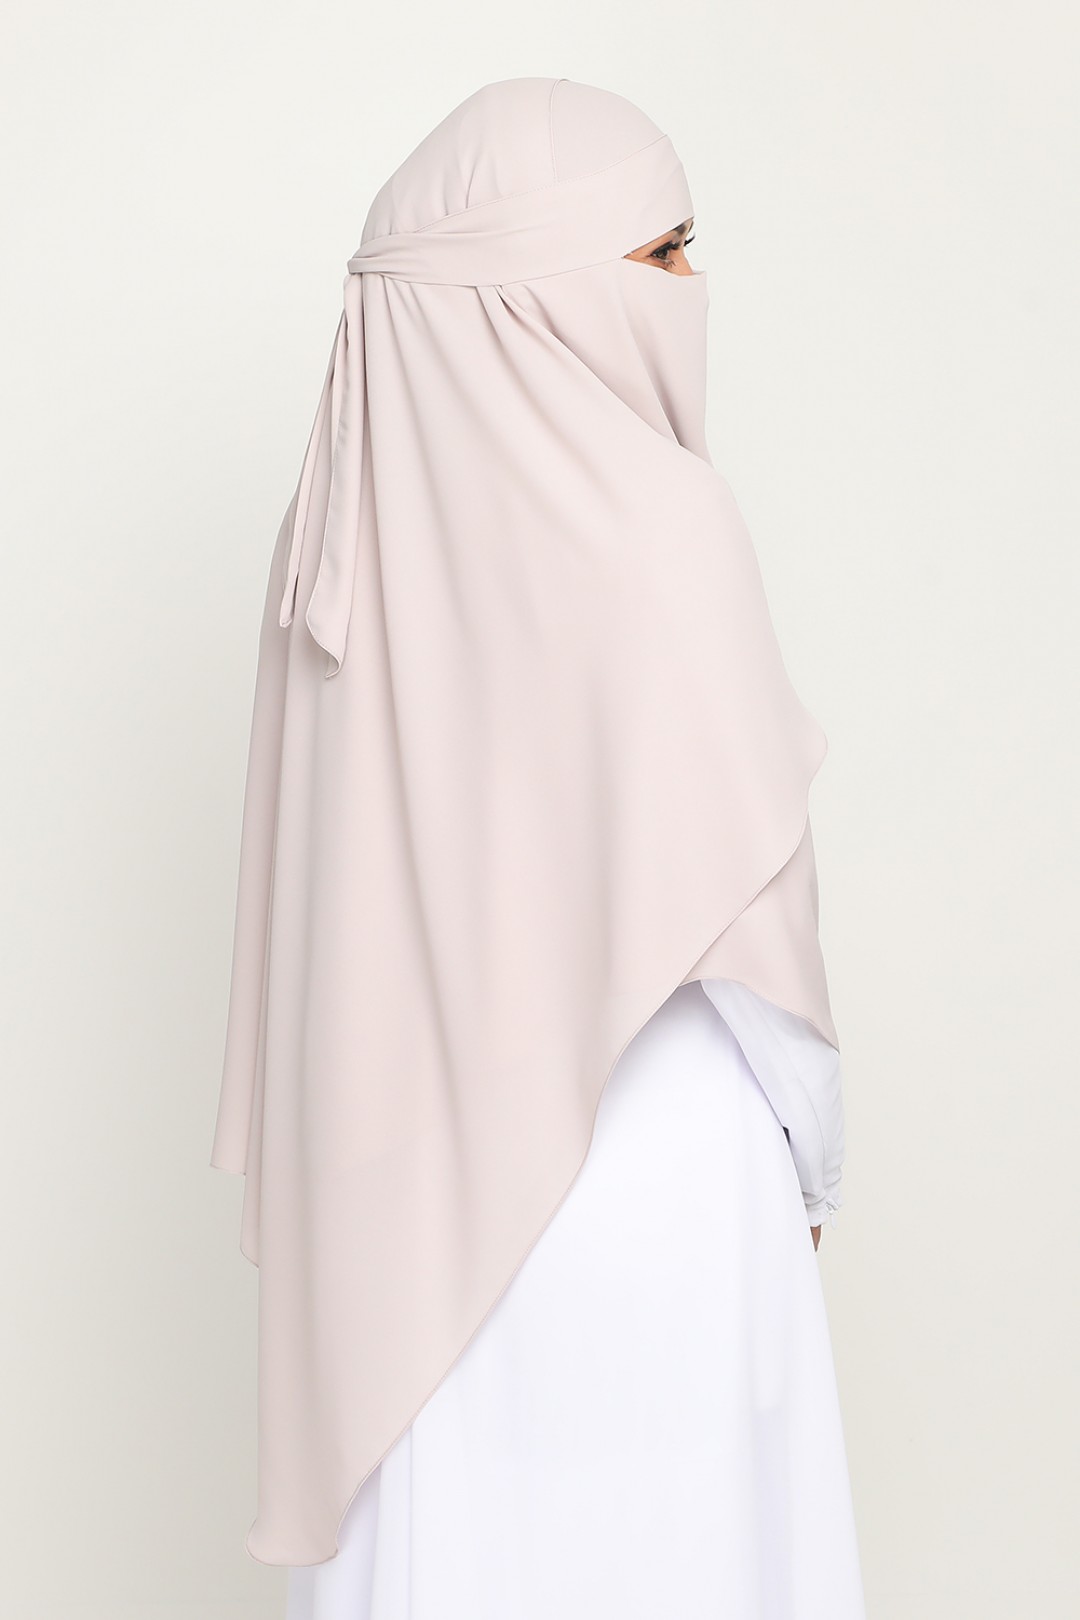 Niqab Light Pink